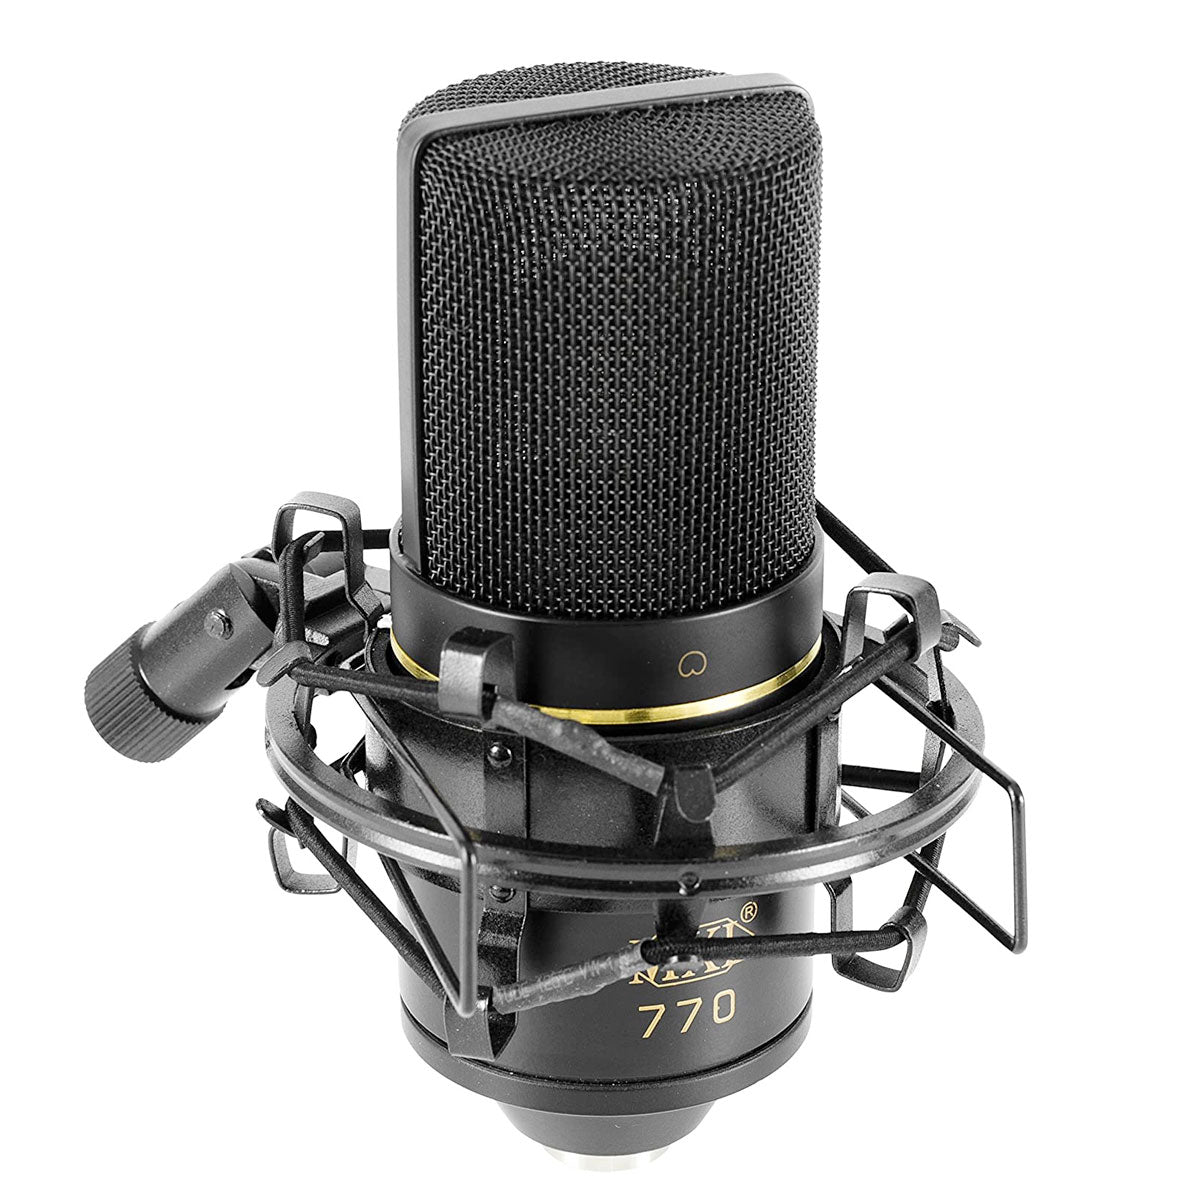 MXL 770 Small-Diaphragm Cardioid Condenser Microphone